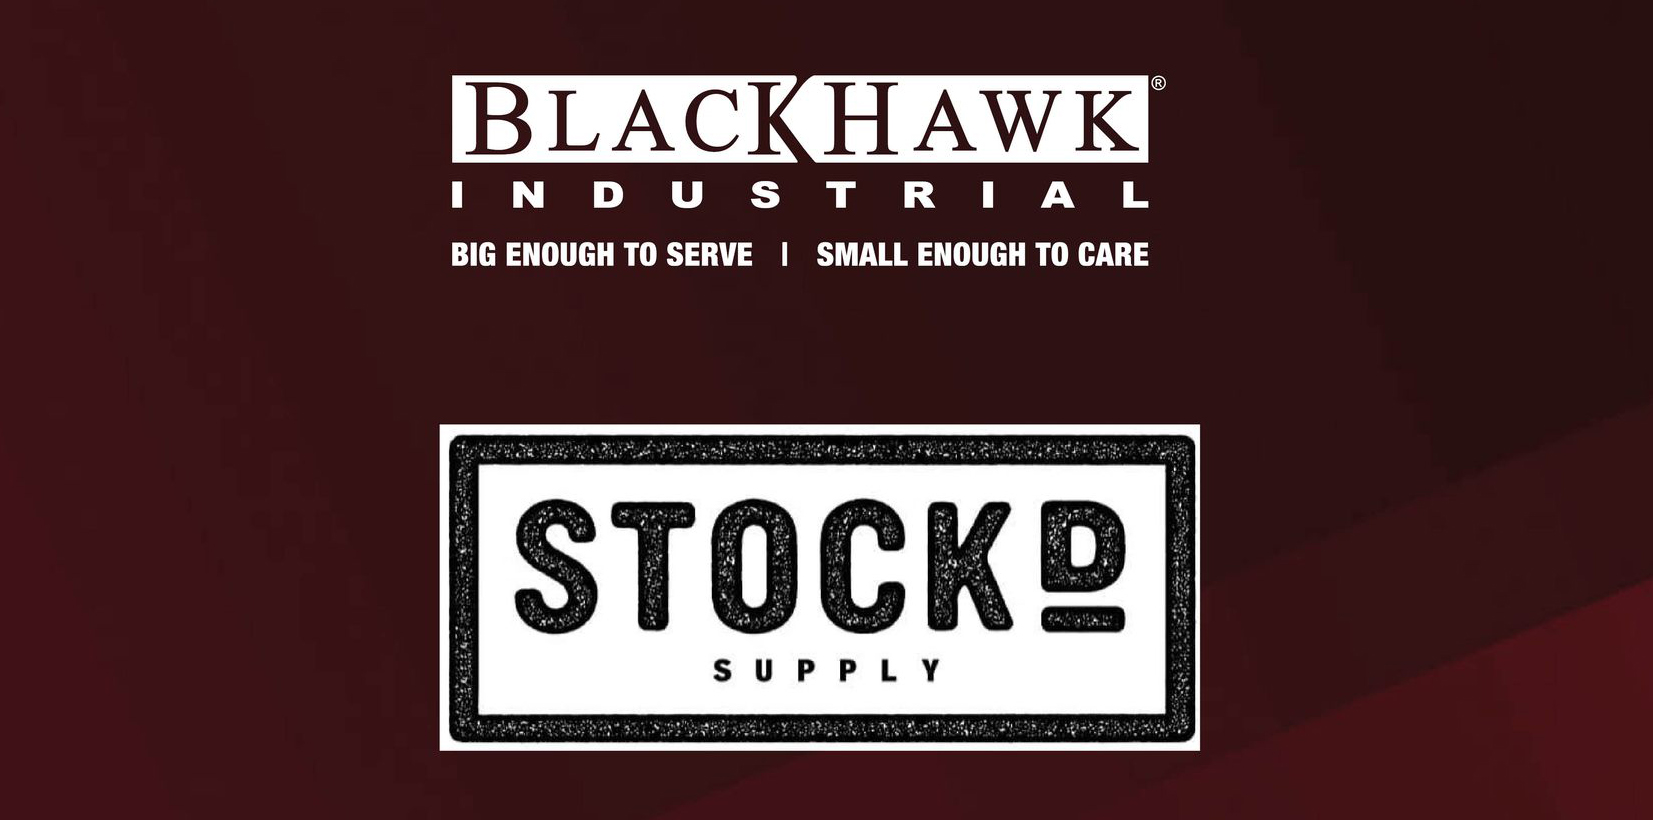 BlackHawk Industrial Stock'd Supply